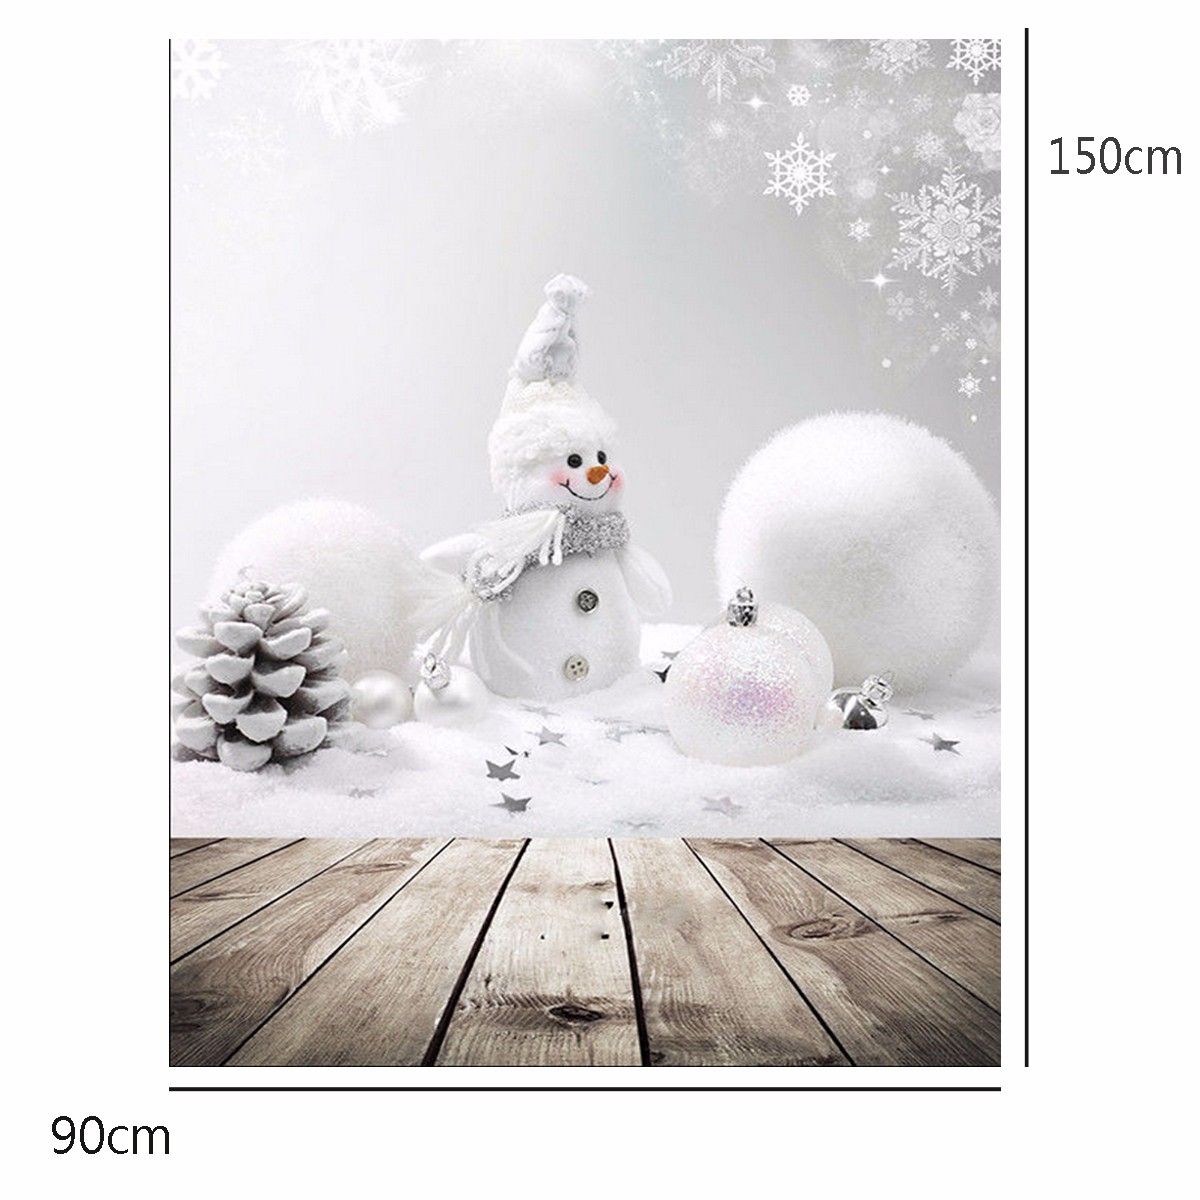 3x5ft-Christmas-Theme-Christmas-Snowman-Wooden-Photography-Vinyl-Background-1130341